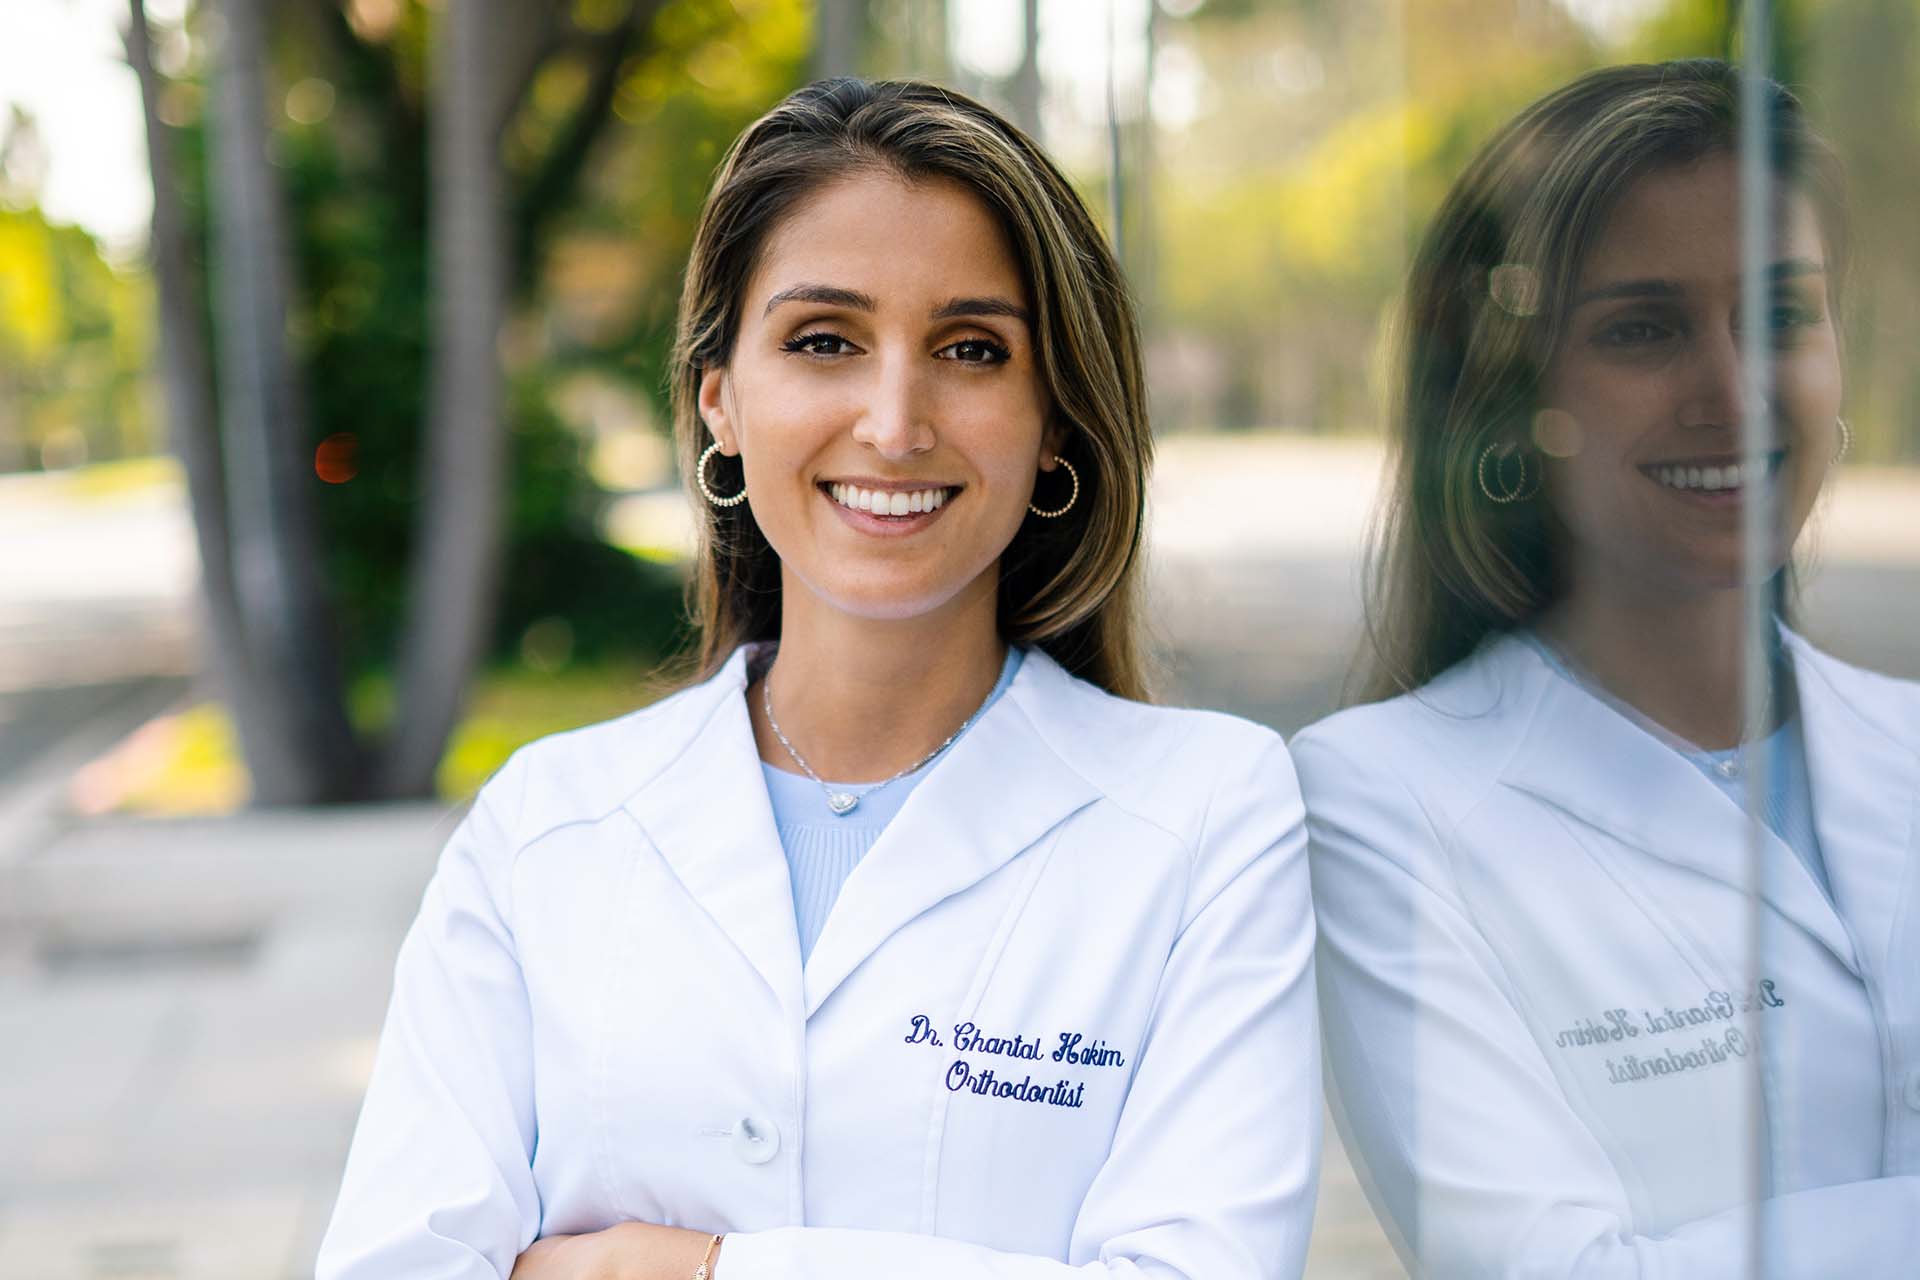 Dr Chantal Hakim of the Orthospaceship - Hakim Orthodontics serving Santa Monica